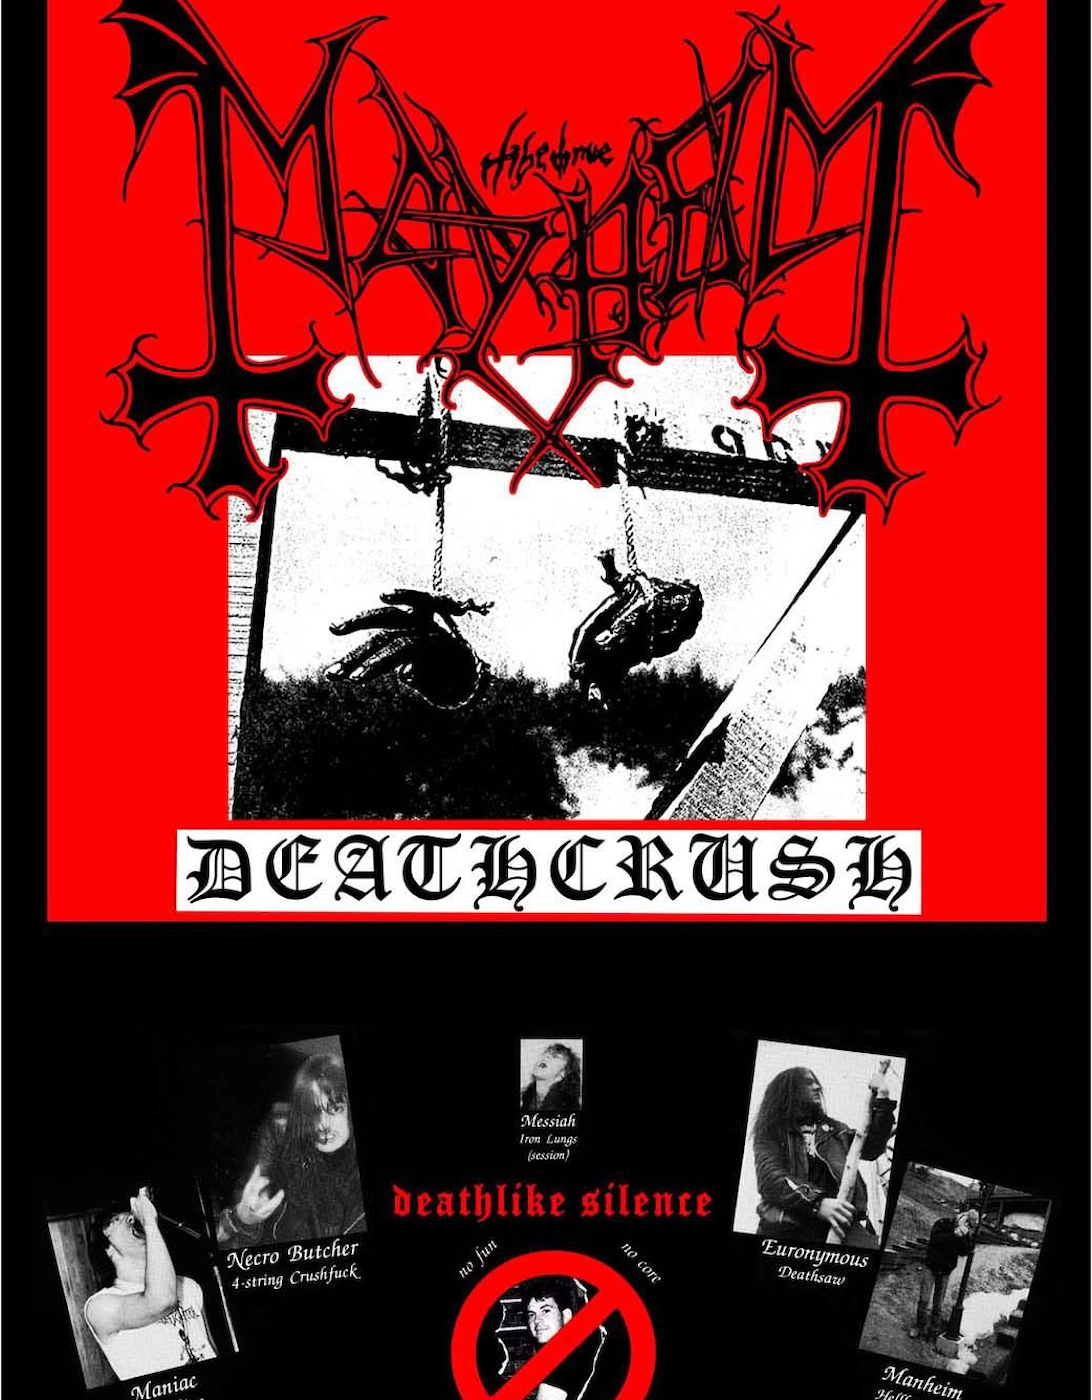 Deathcrush Textile Poster, 2 of 1